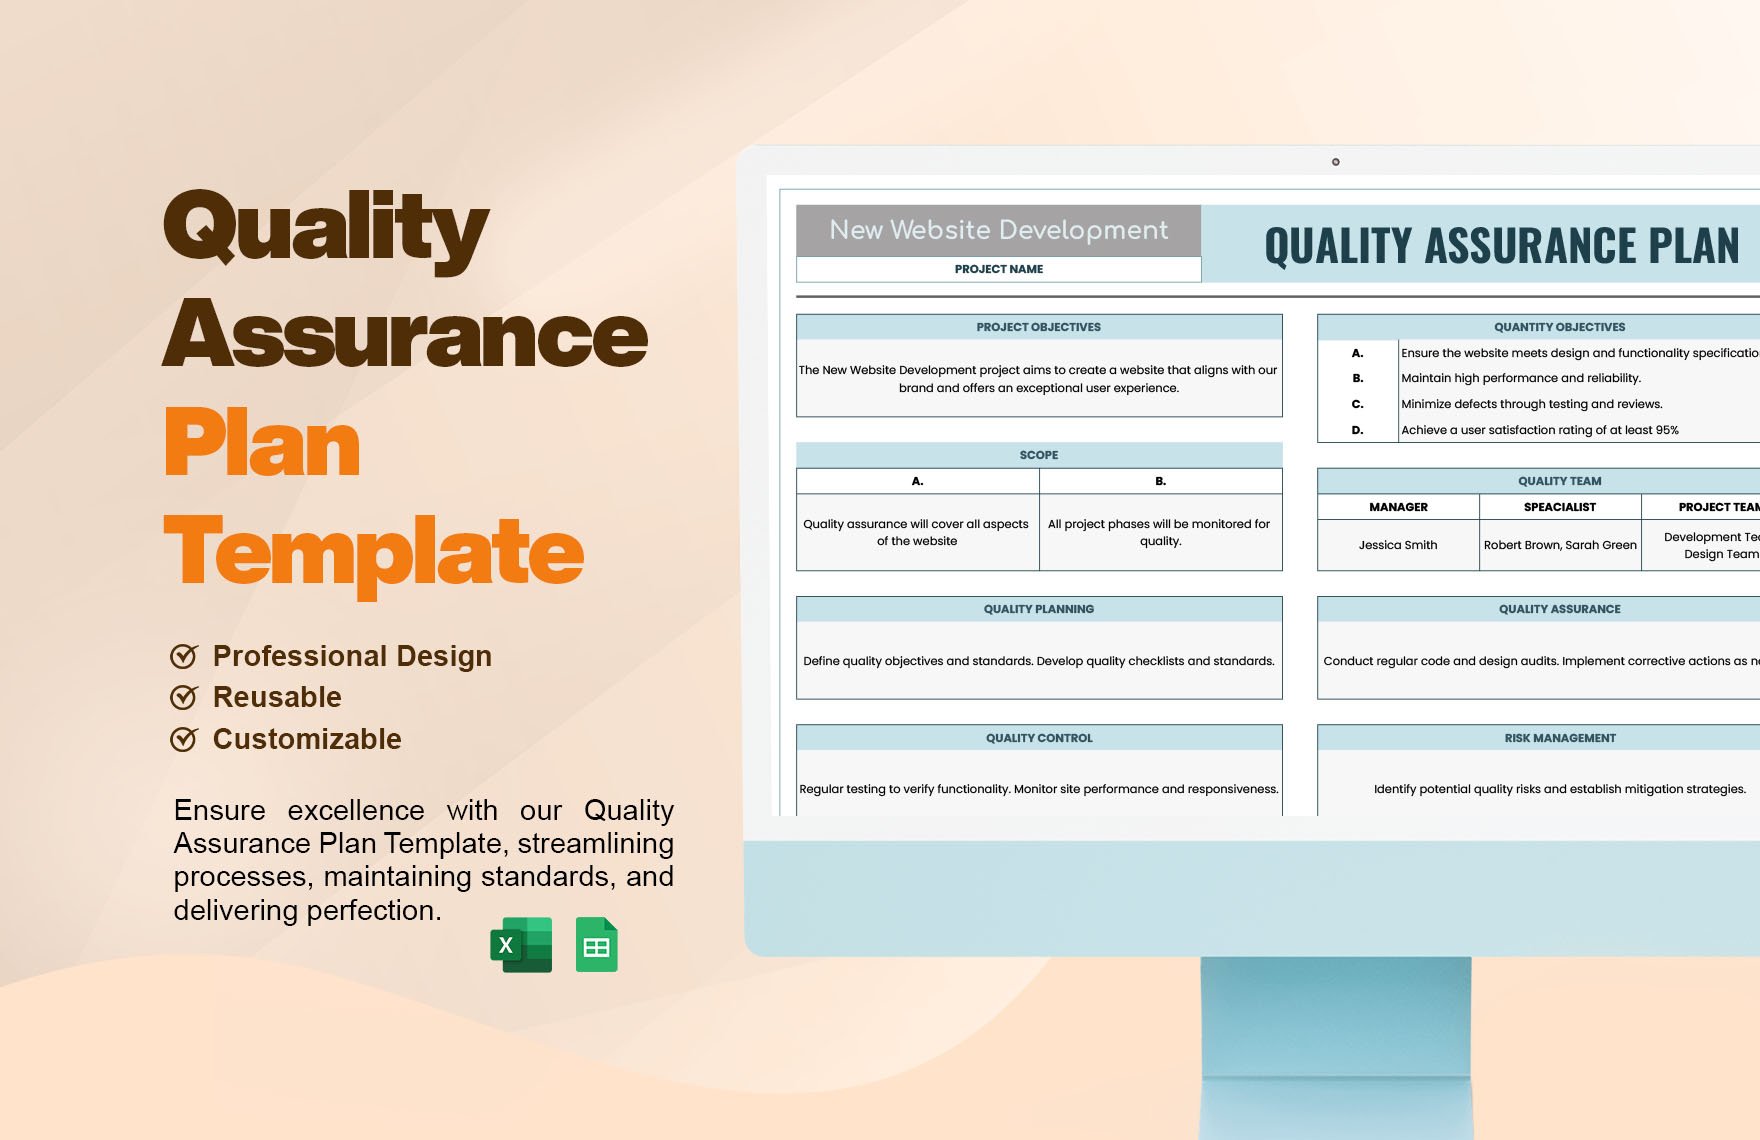 Quality Assurance Plan Template